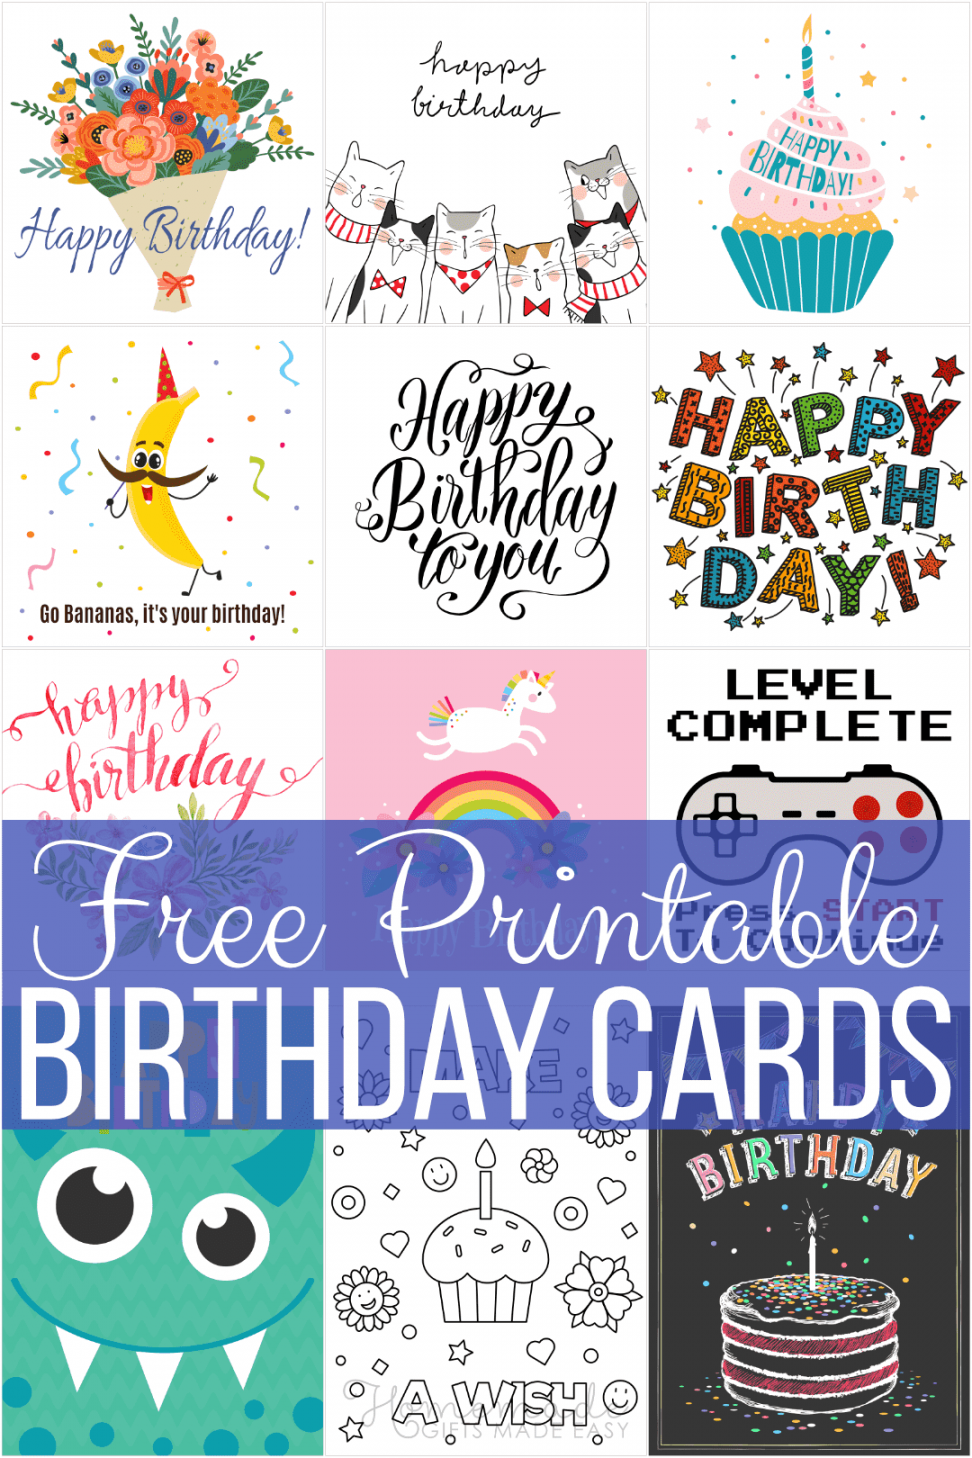 Birthday Card Free Printable - Printable - Free Printable Birthday Cards for Everyone